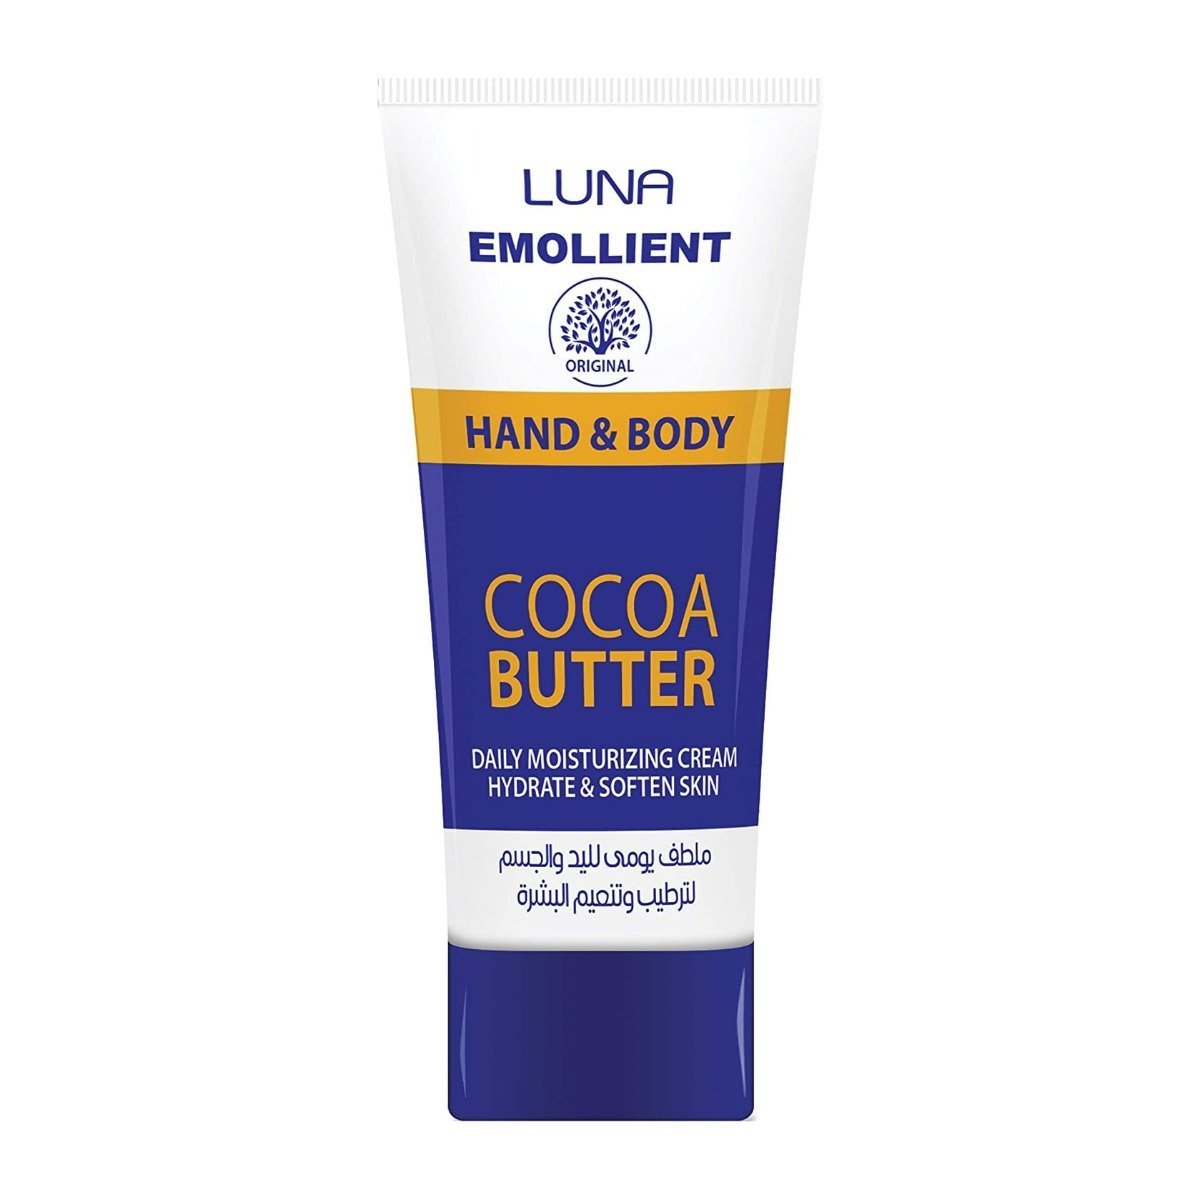 Luna Emollient Cocoa Butter Hand & Body Cream - 75gm - Bloom Pharmacy